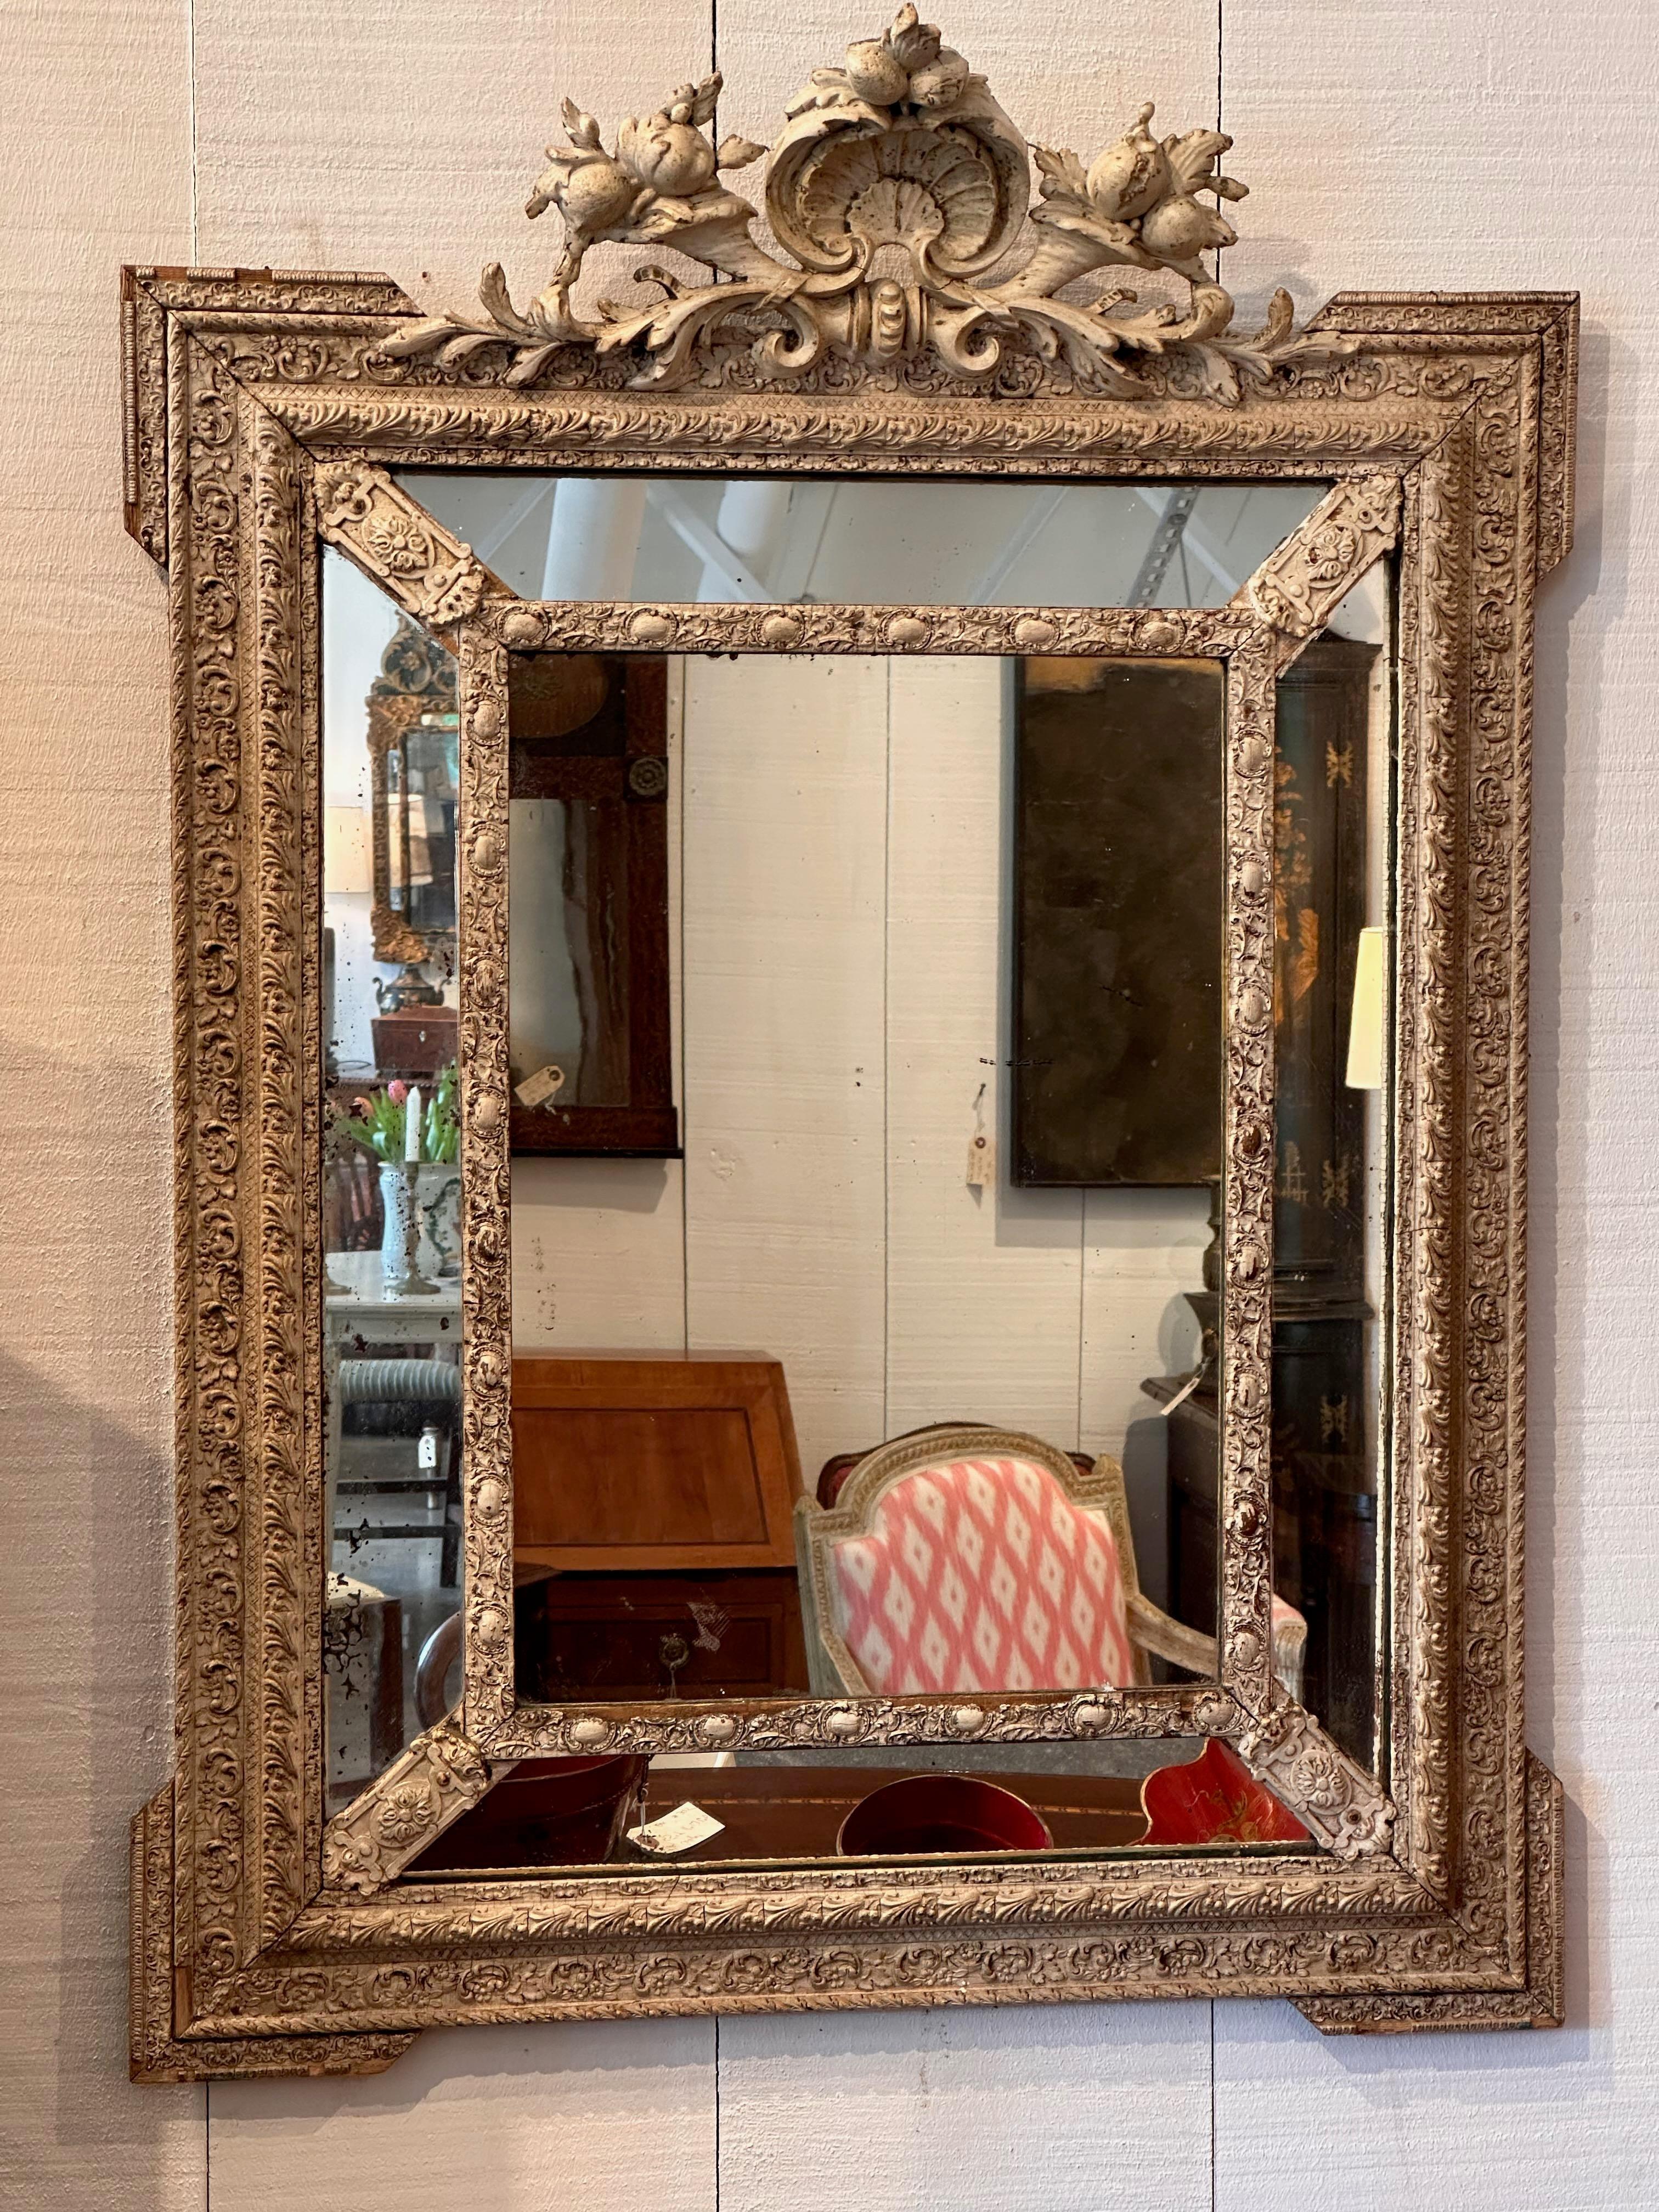 Nice Italian mirror. Made in the 19th Century.